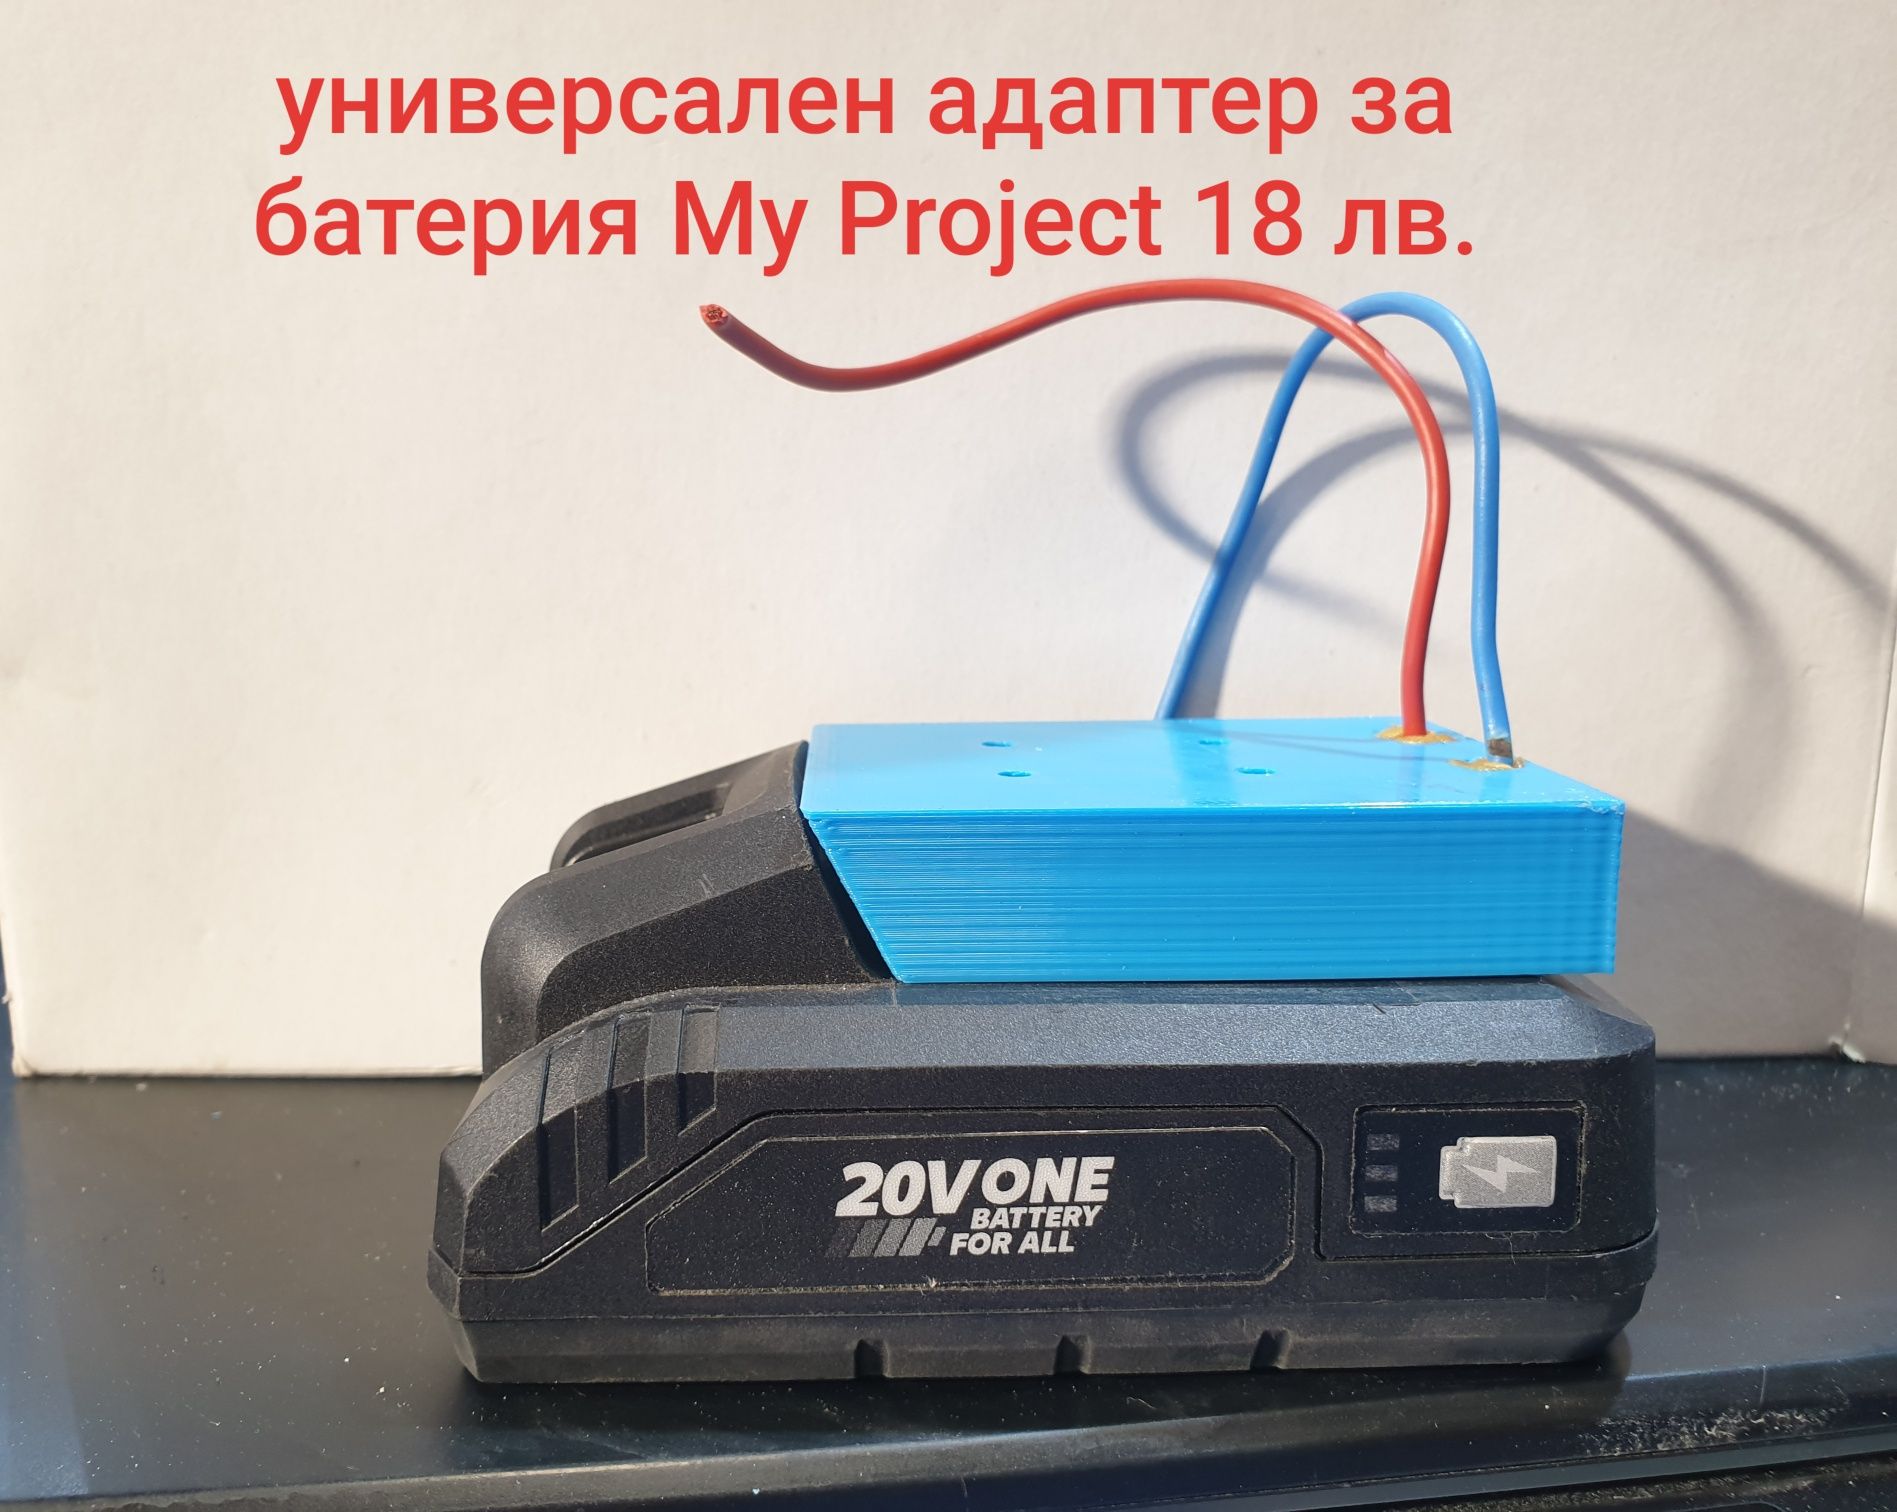 Универсален адаптер за батерия My Project